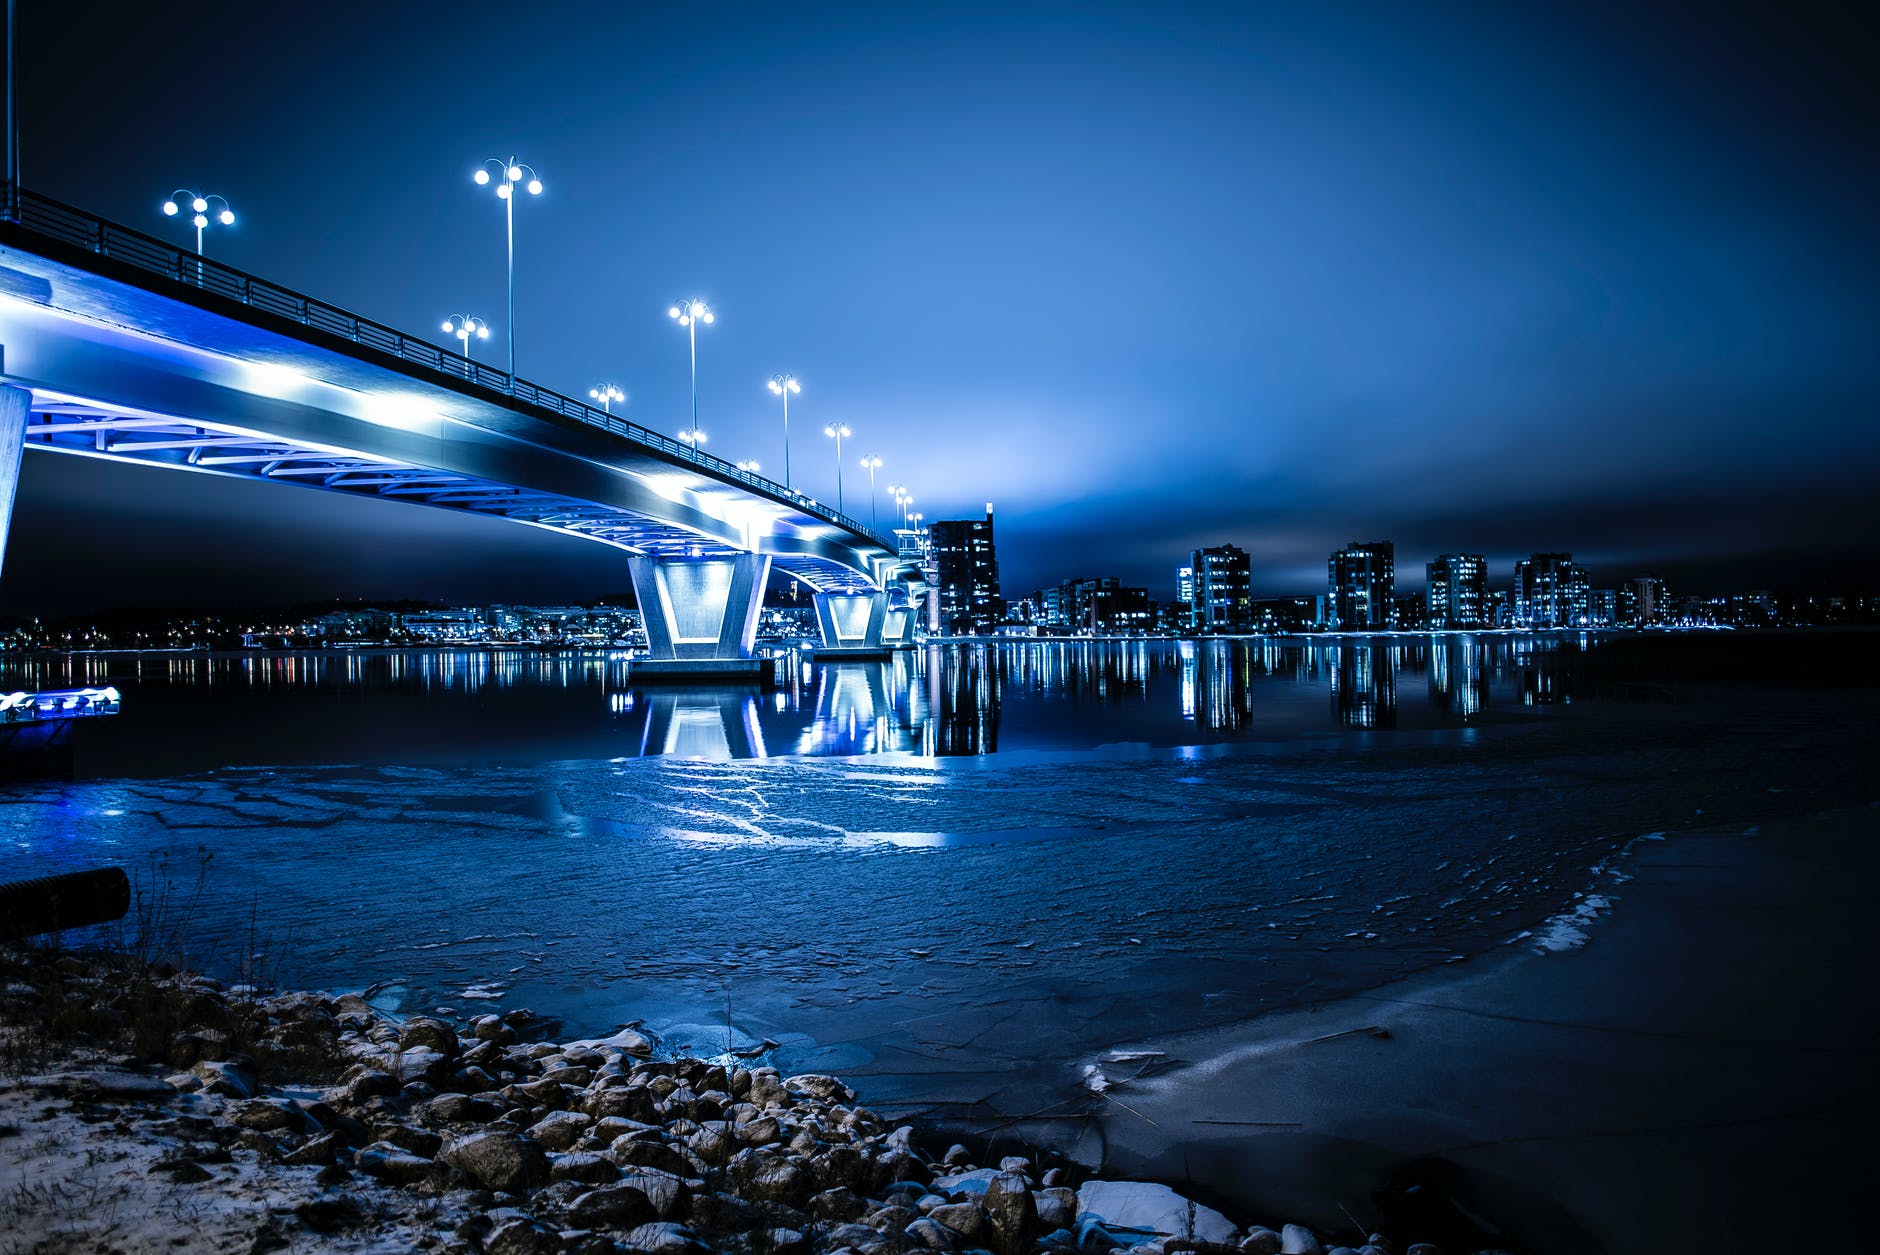 bridge with lights at night